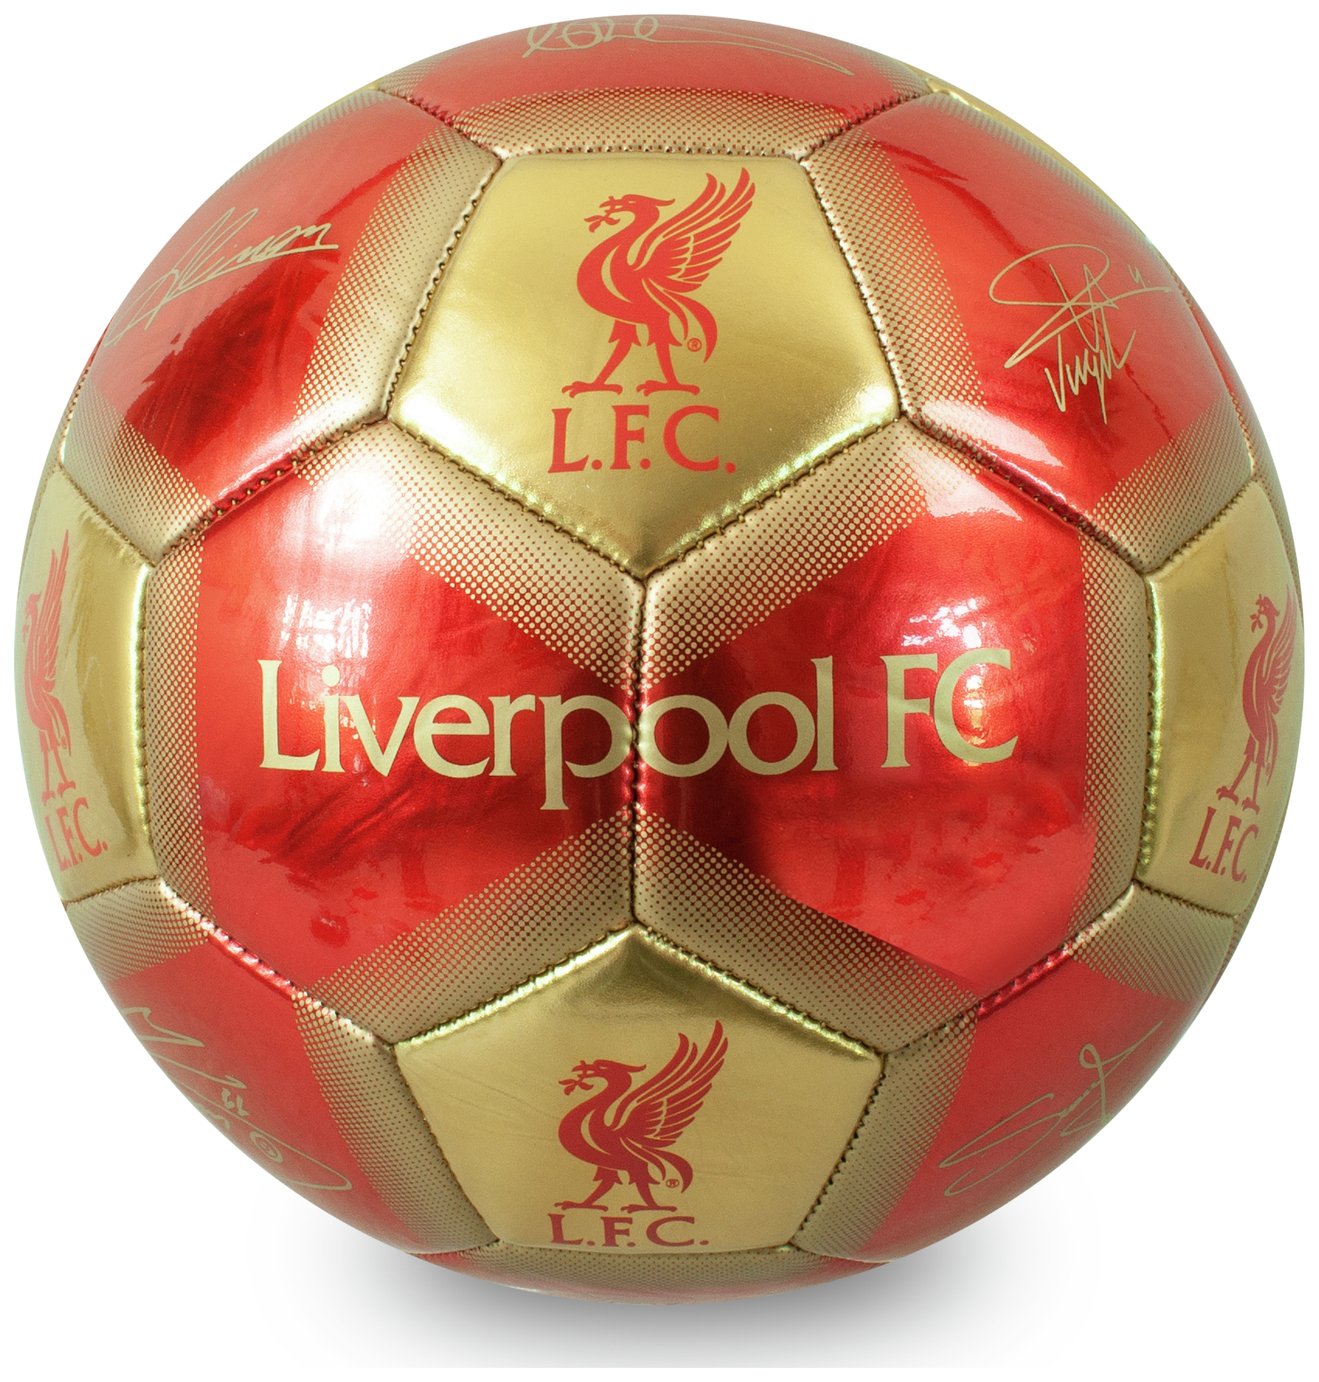 Liverpool Football Club Football Taille 5